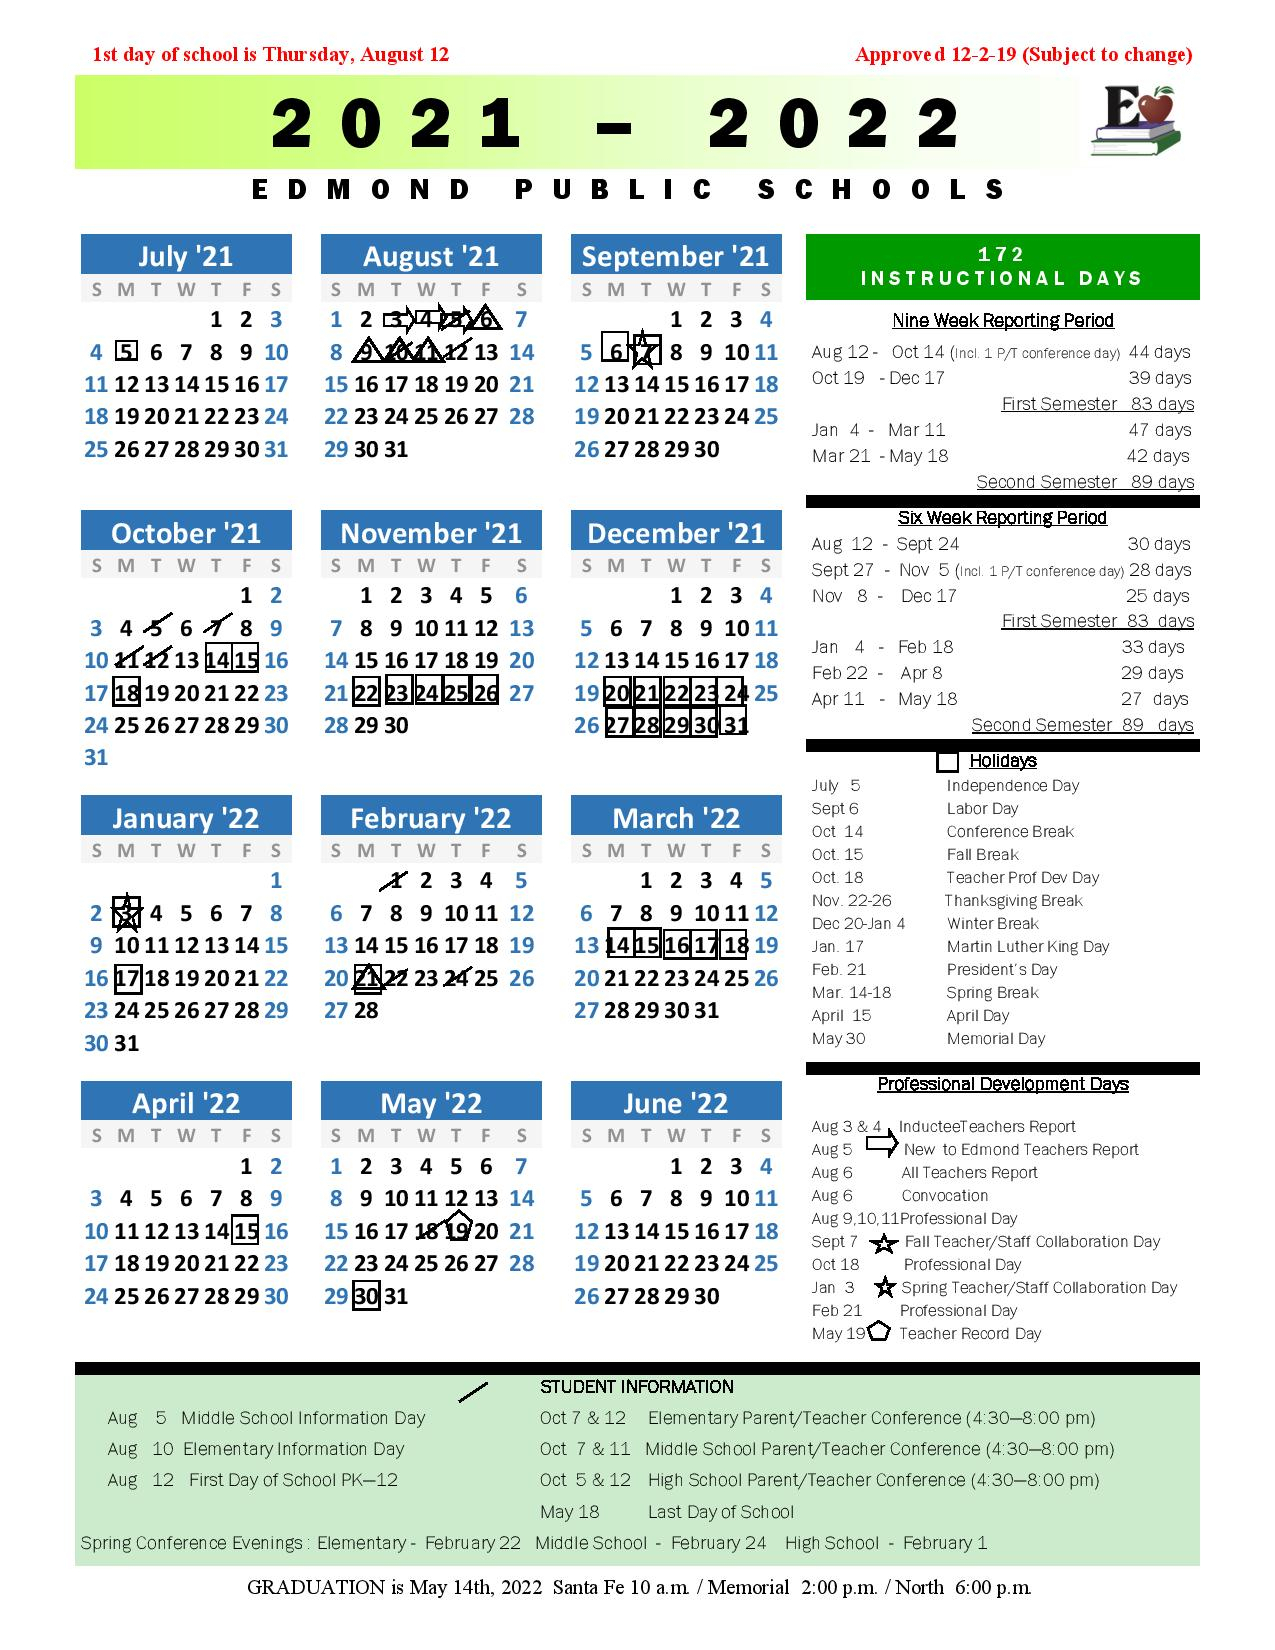 Edmond Public Schools Calendar 2021-2022 In Pdf